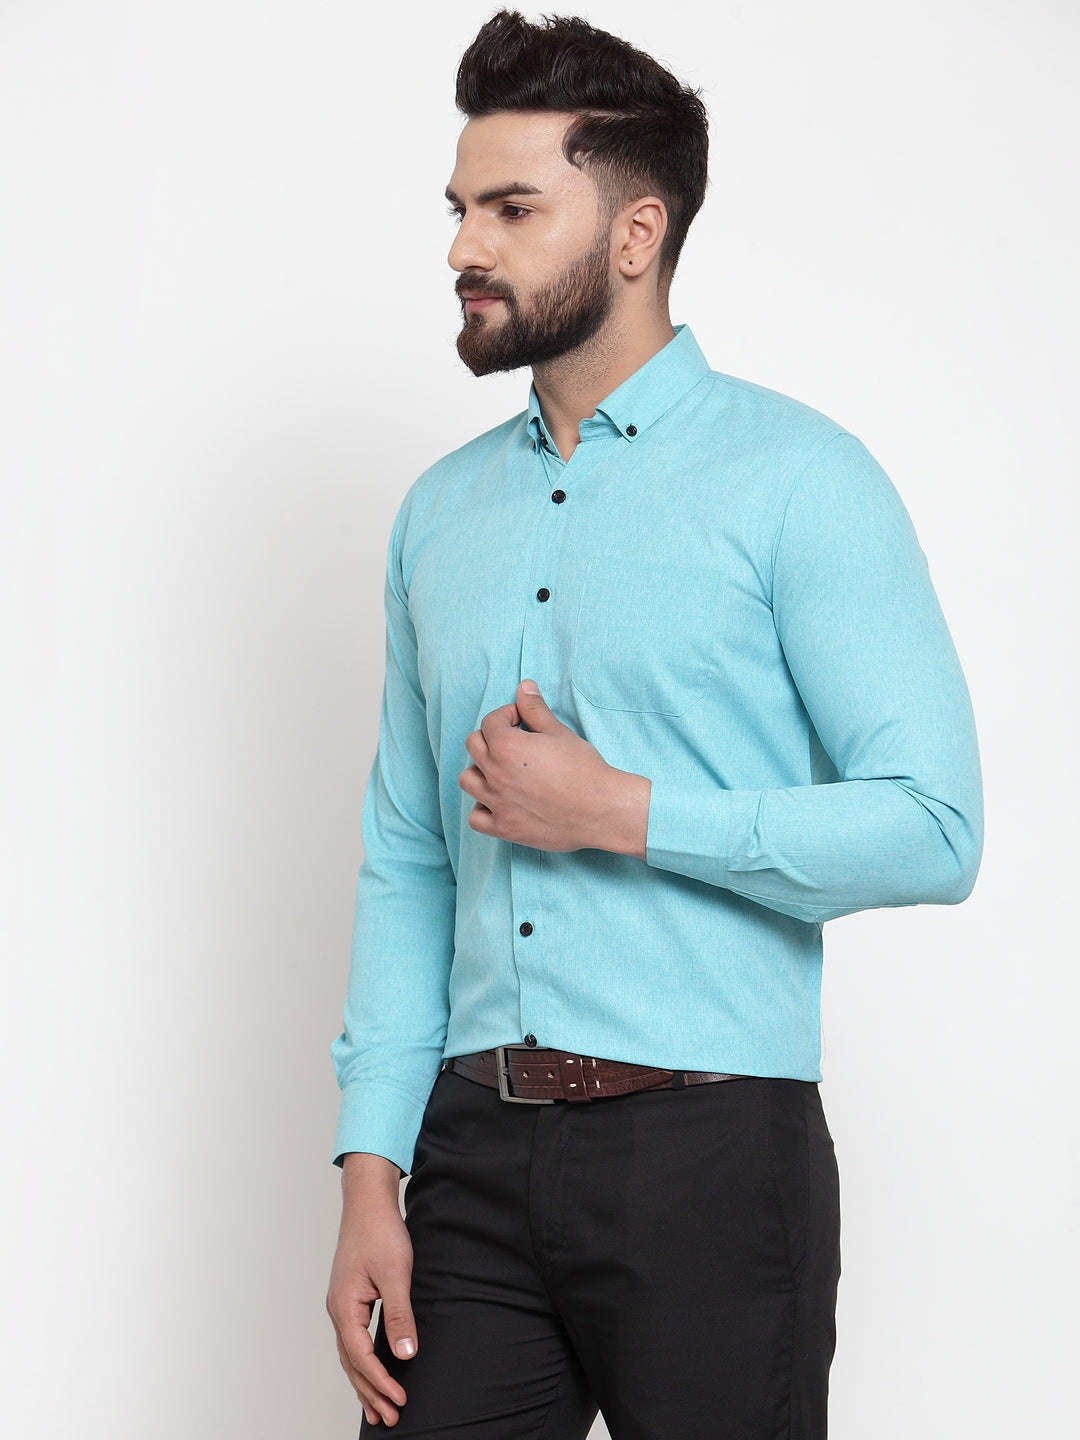 Men's Green Cotton Solid Button Down Formal Shirts ( SF 734Aqua ) - Jainish